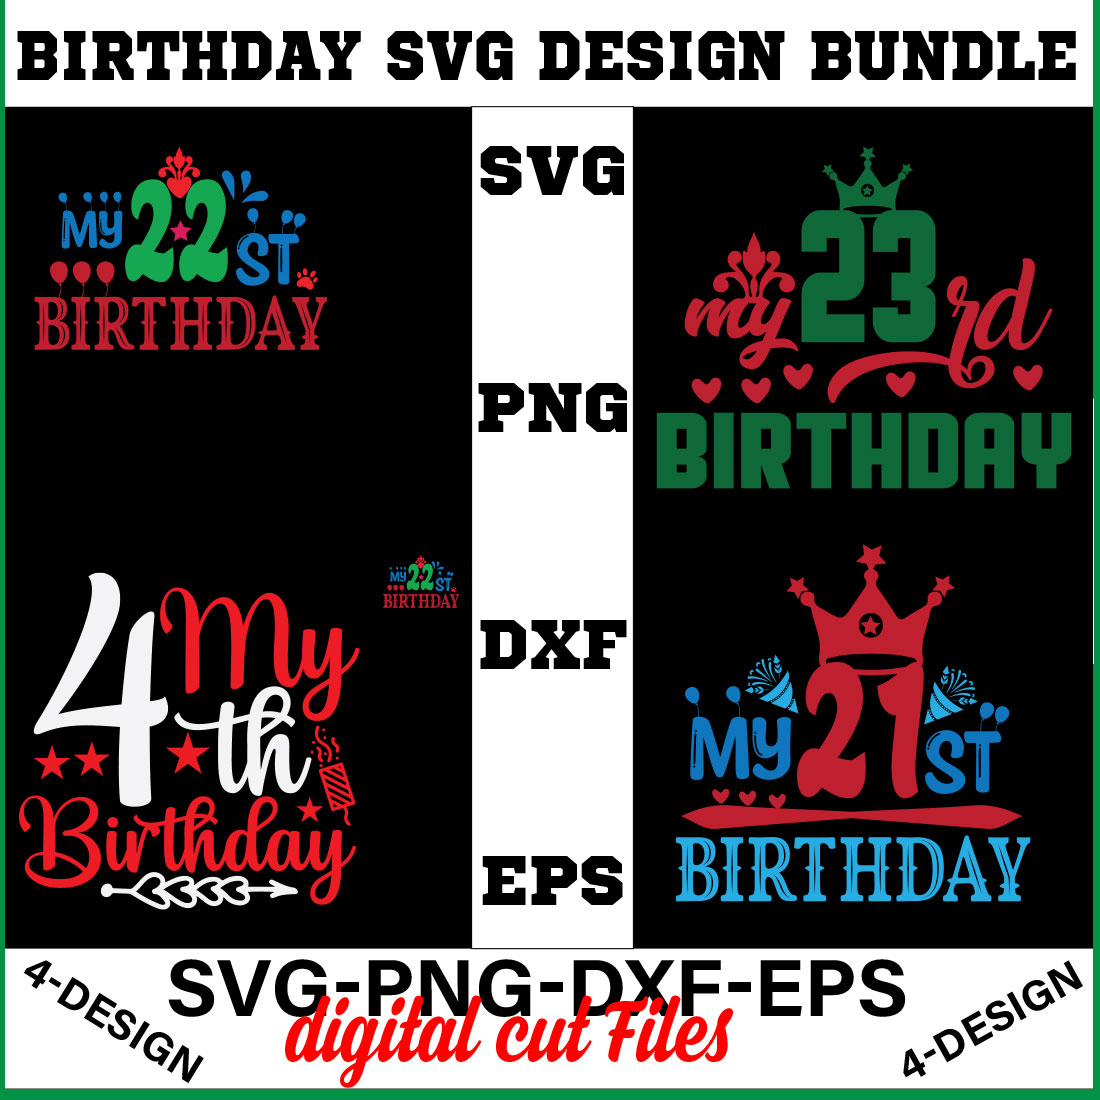 birthday svg design bundle Happy birthday svg bundle hand lettered birthday svg birthday party svg Volume-22 cover image.